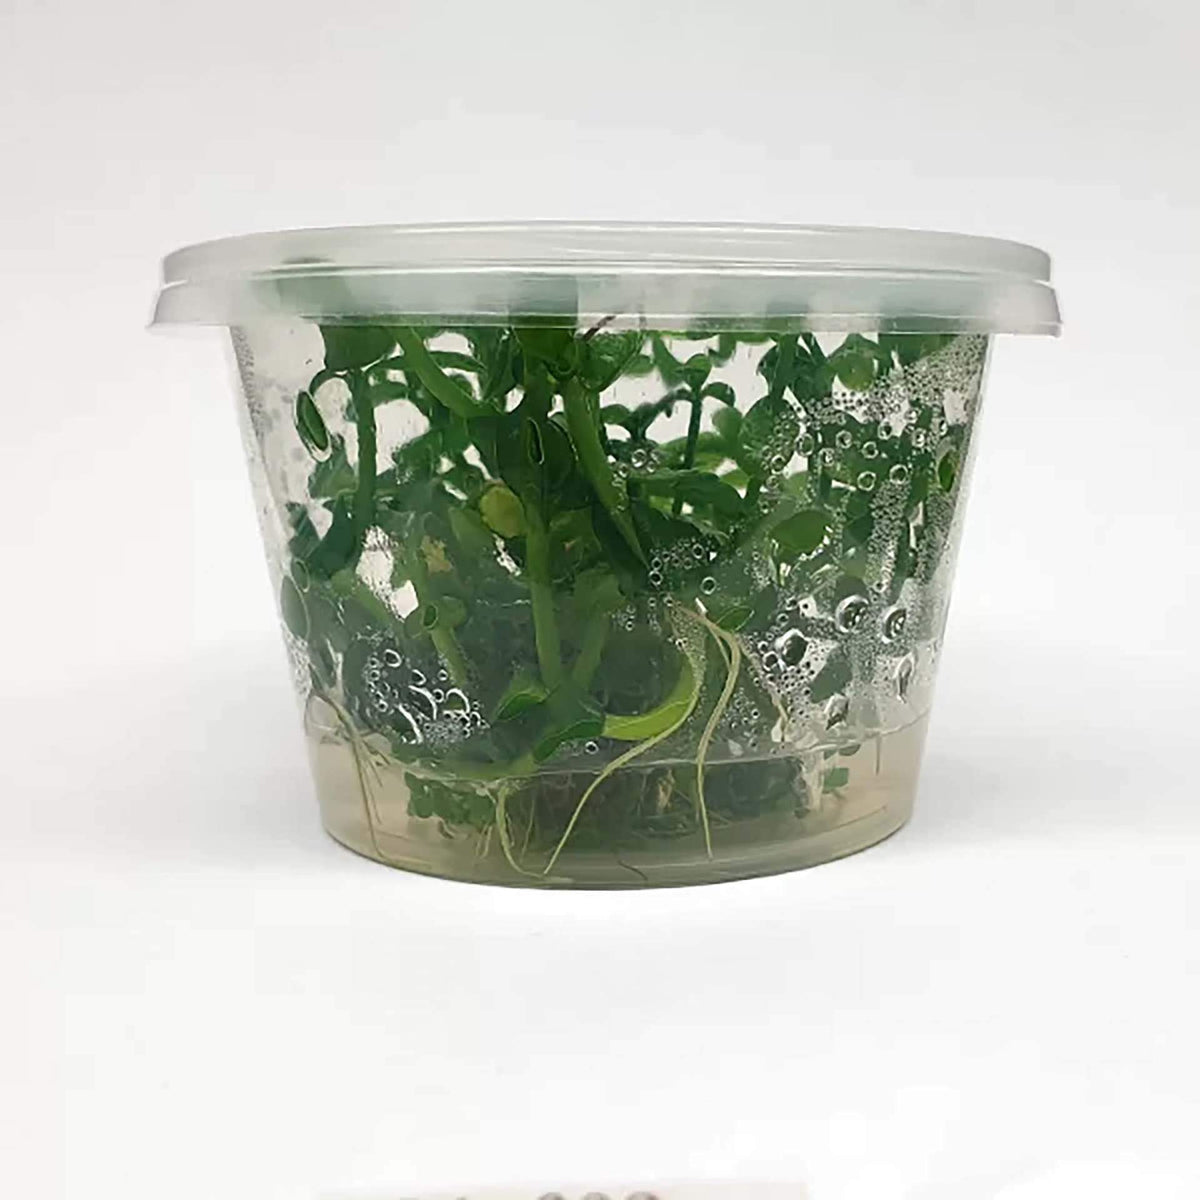 Bacopa monnieri ‘Moneywort’ Live Plant - Tissue Culture